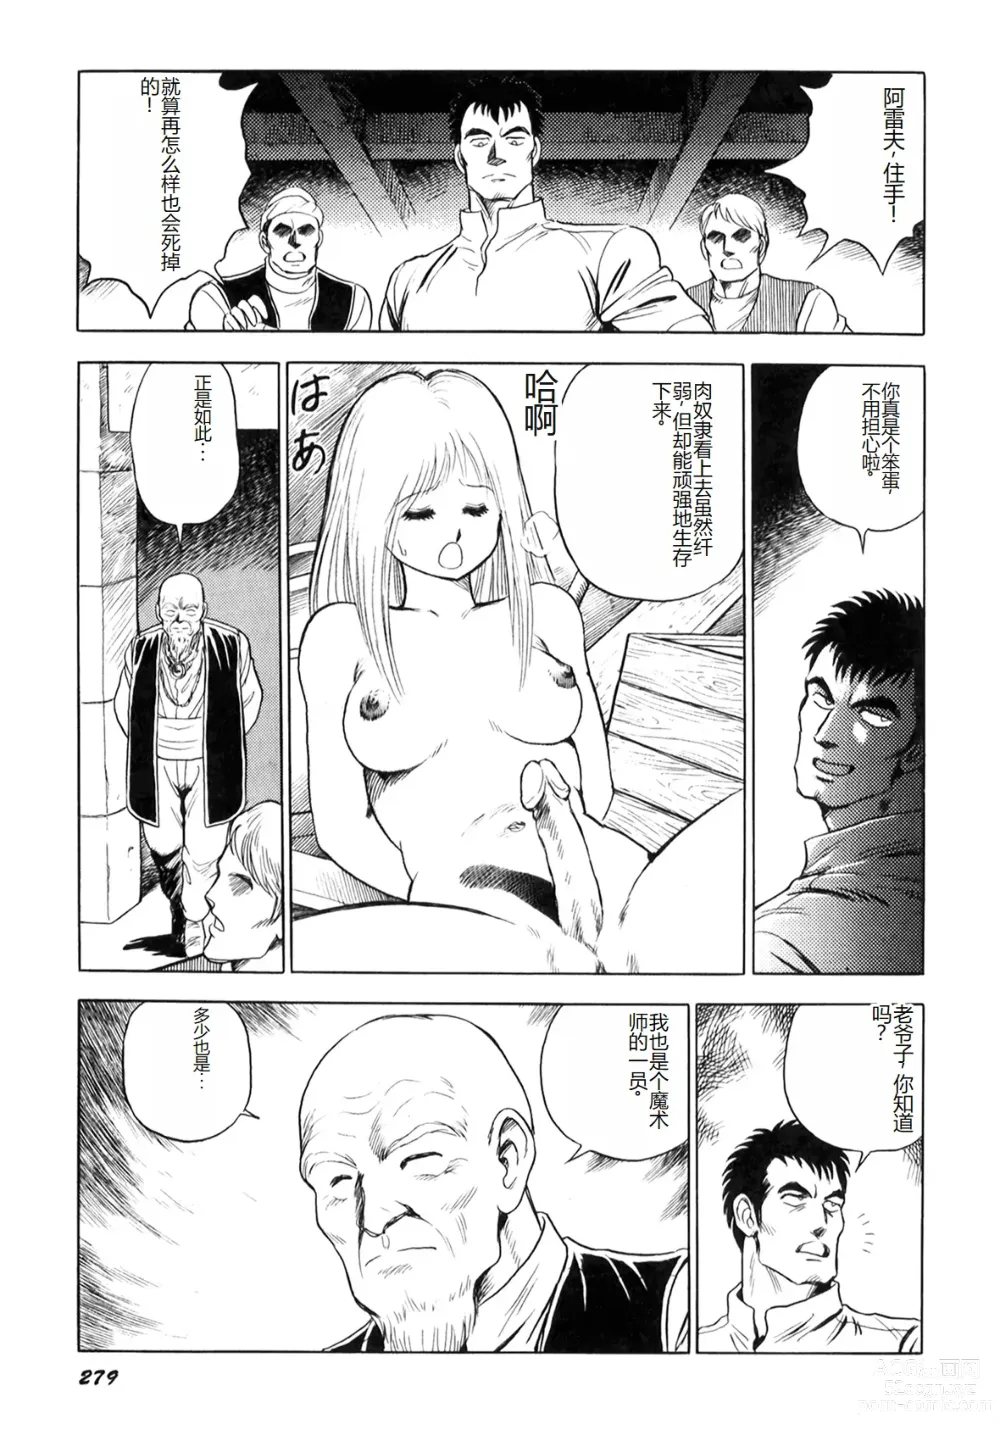 Page 280 of manga Dorei Senshi Maya I